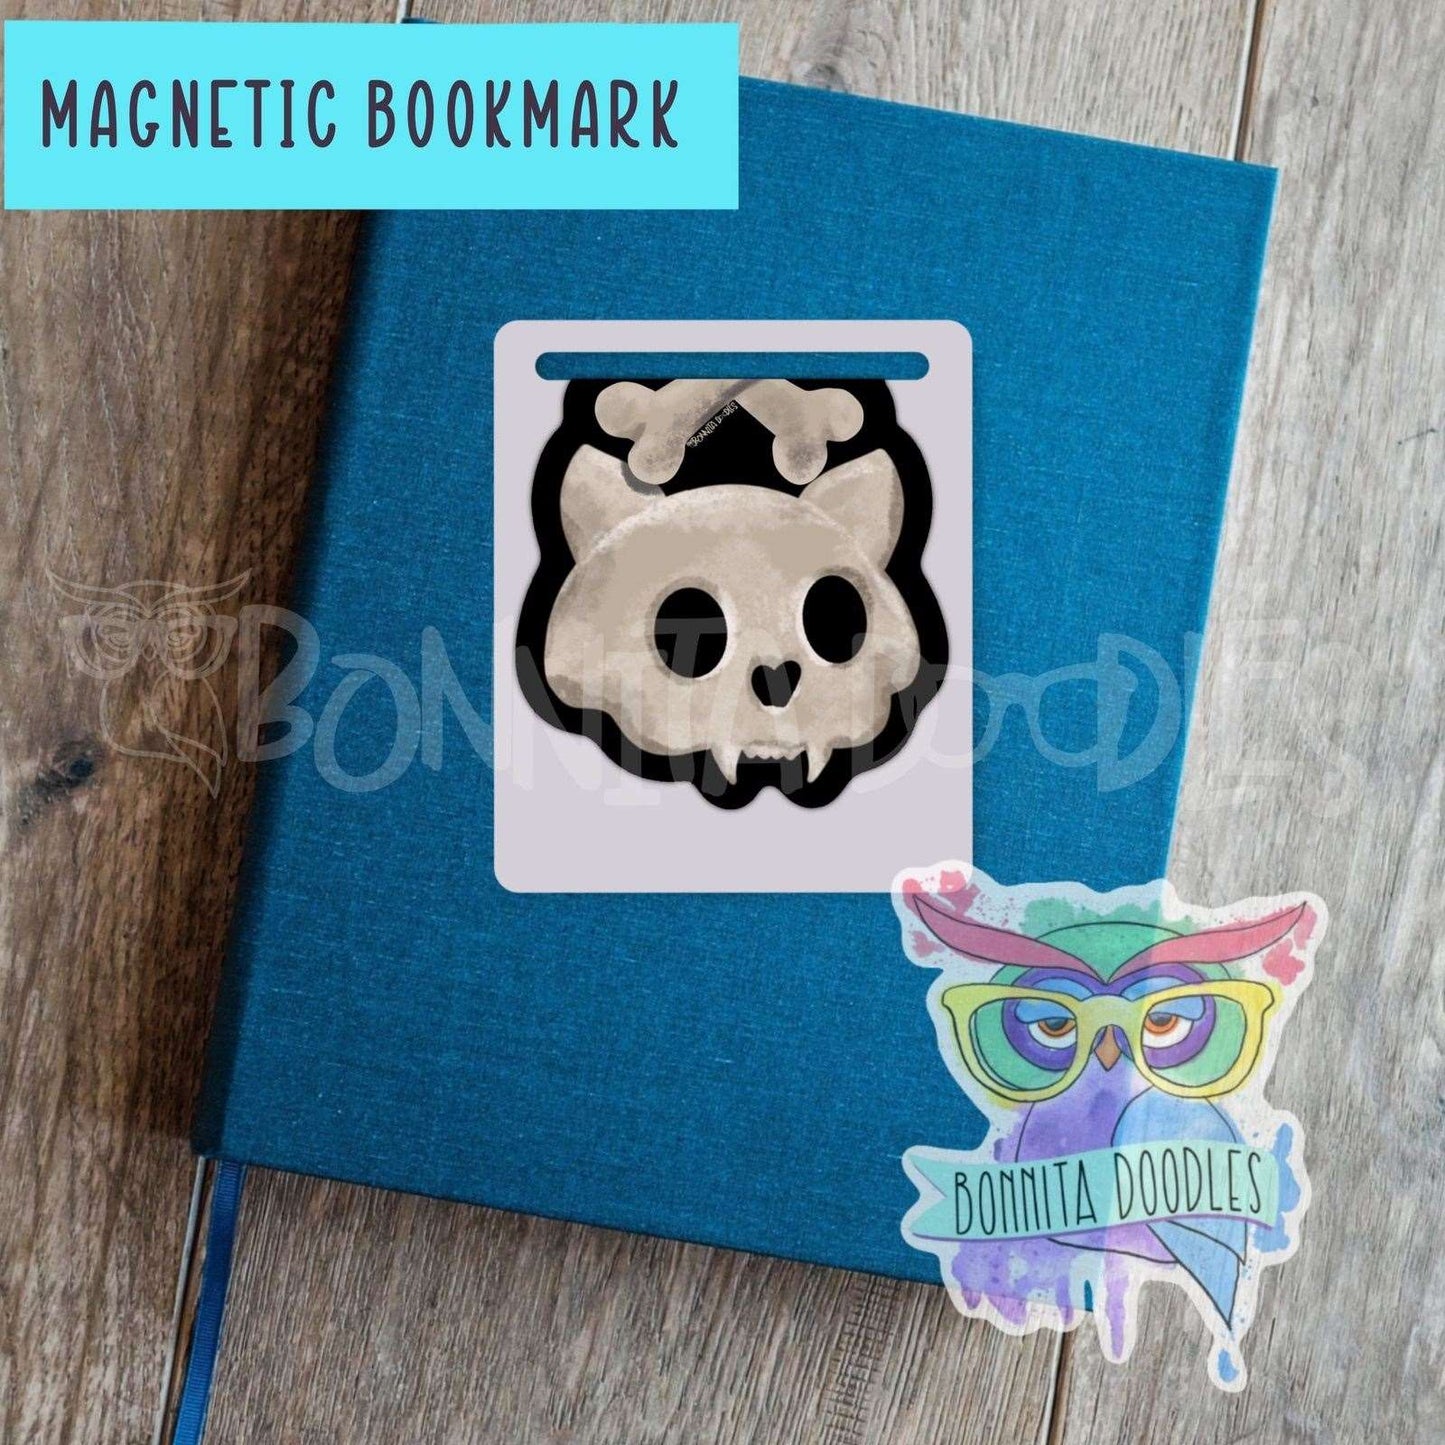 Kawaii cat skull & bones lovers magnetic bookmark - the perfect gift